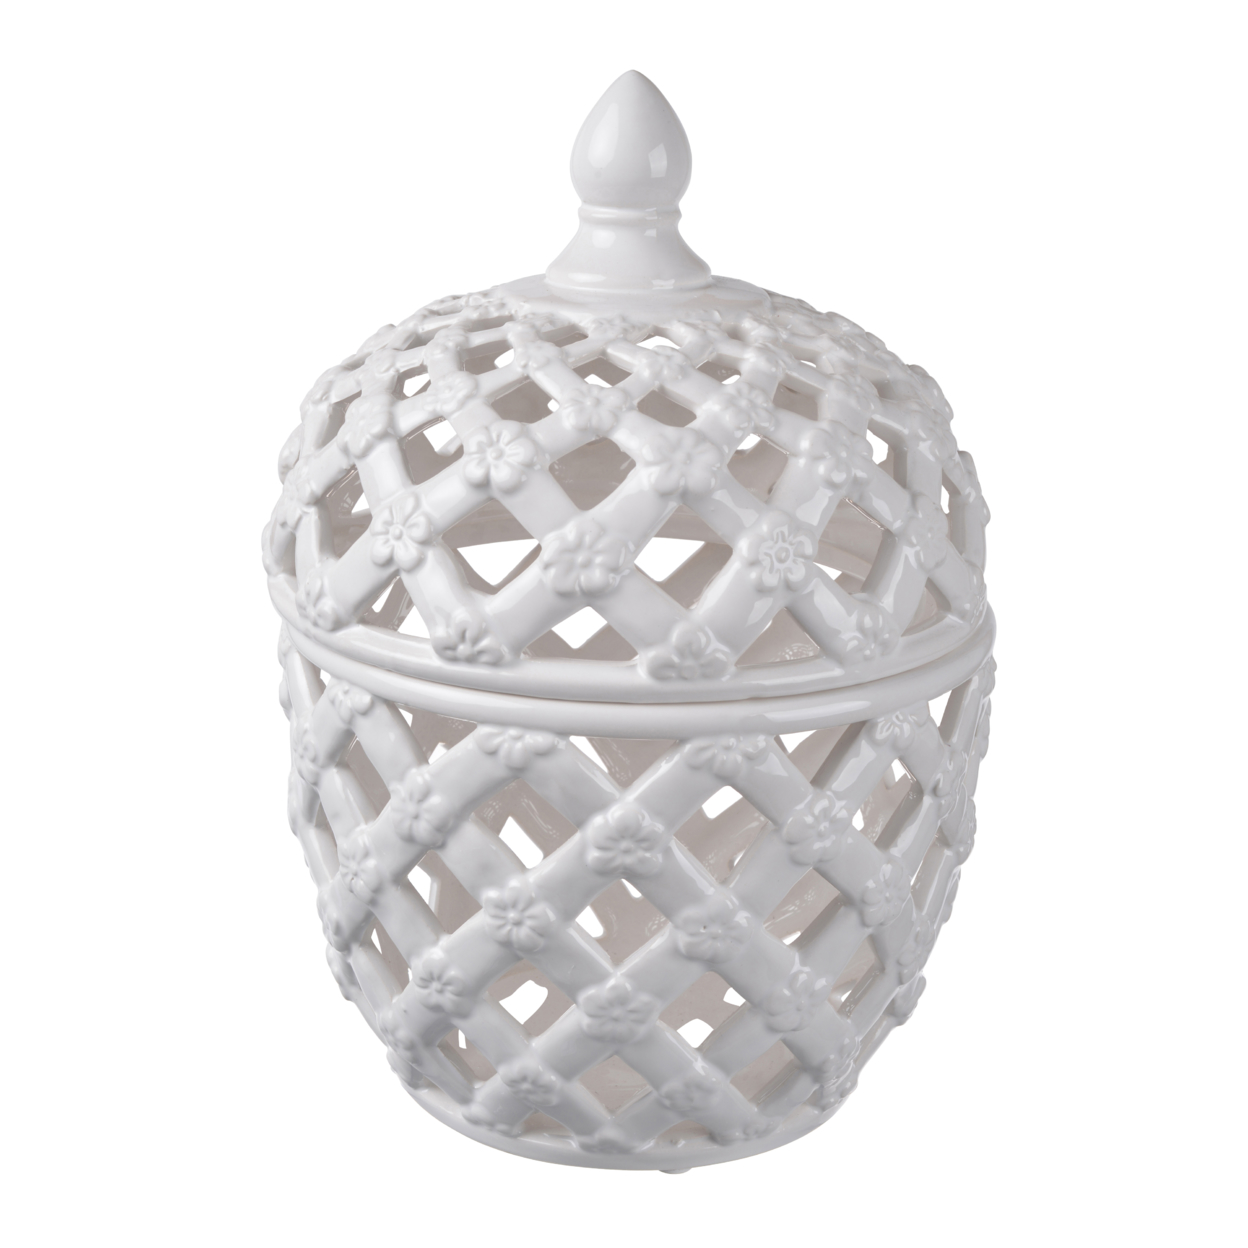 Decorative Ceramic Lidded Jar With Cut Out Texture, Large, White- Saltoro Sherpi